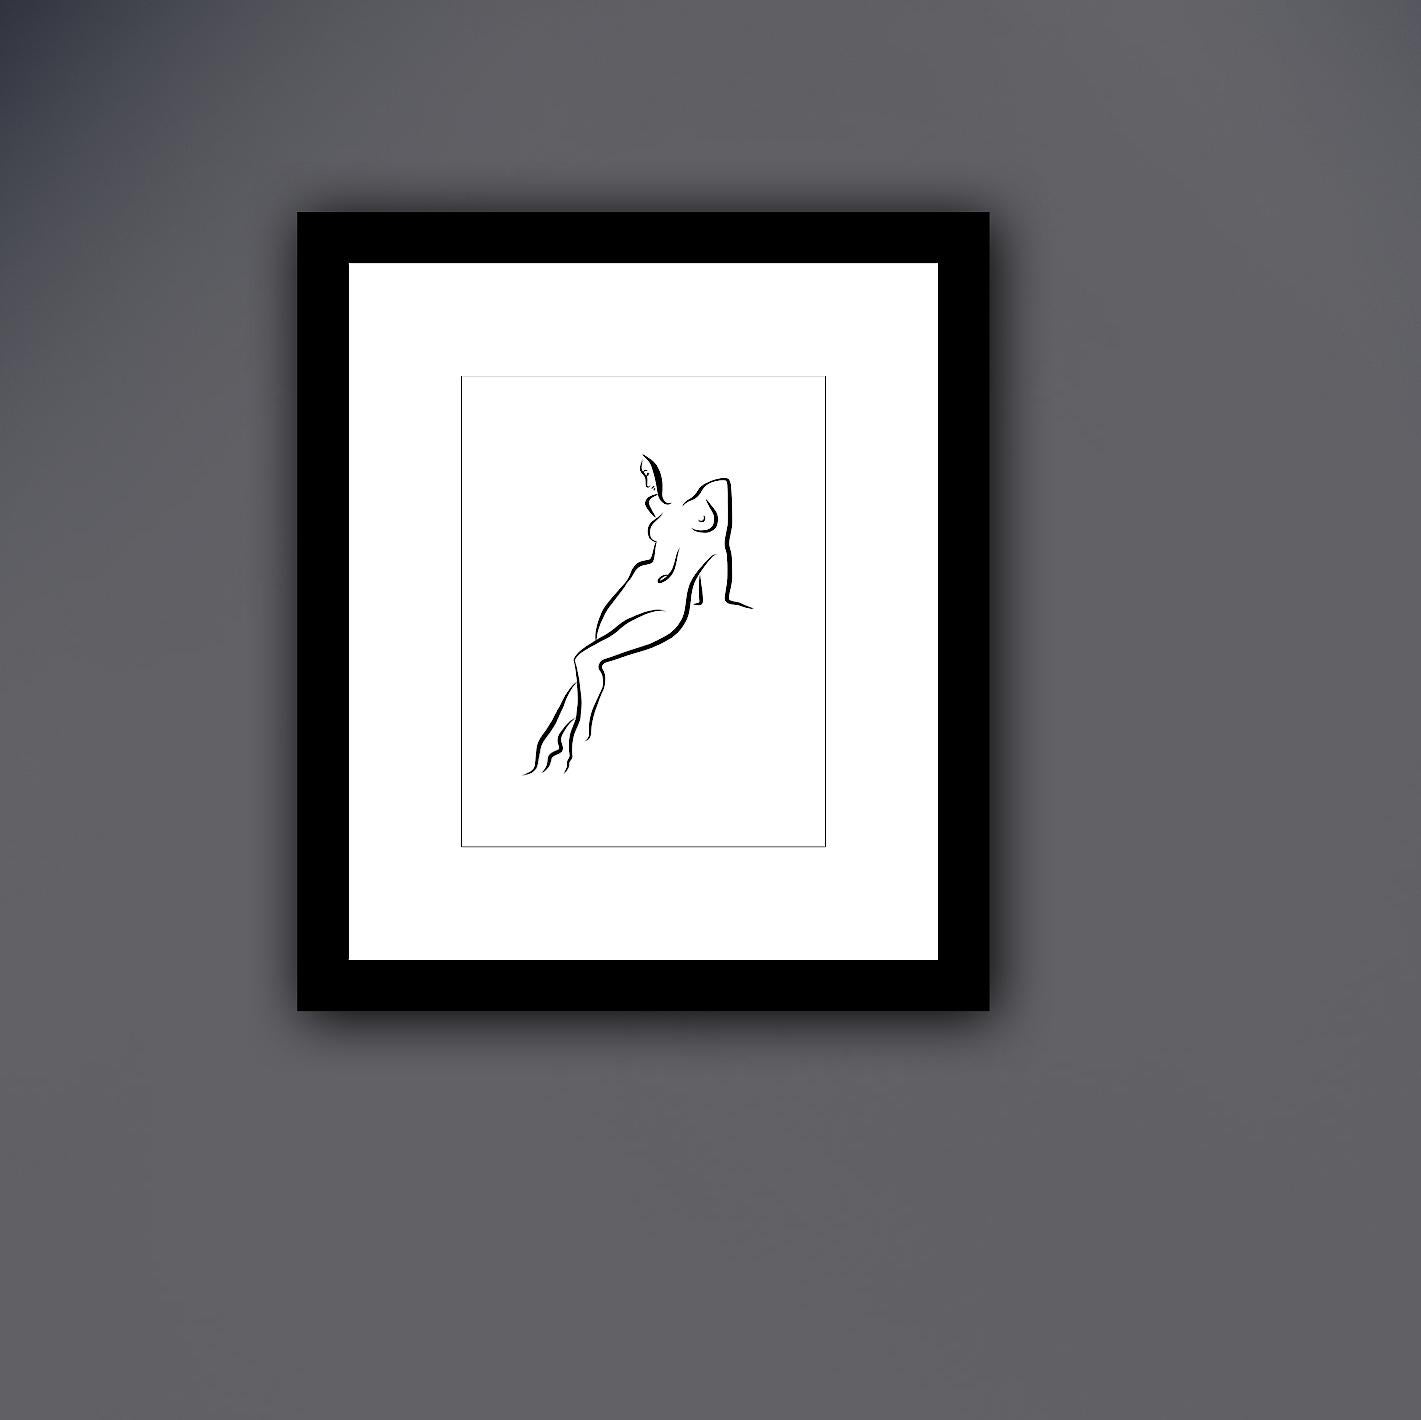 Haiku #25, 1/50 - Digital Vector Drawing Leaning Female Nude Woman Figure - Contemporary Print by Michael Binkley